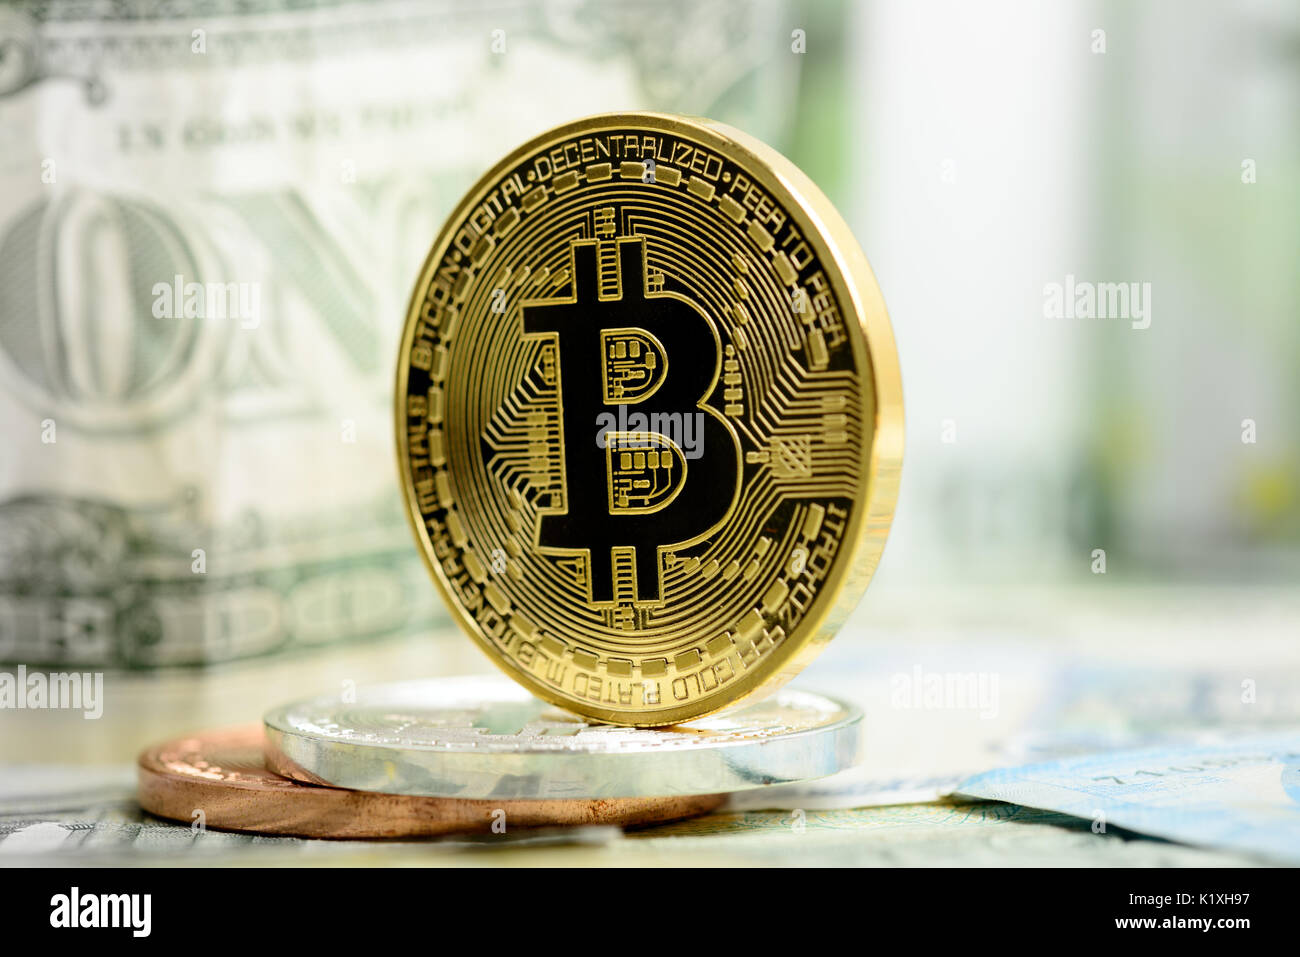 Golden bitcoin su sfondo di denaro. Bitcoin cryptocurrency concept Foto Stock